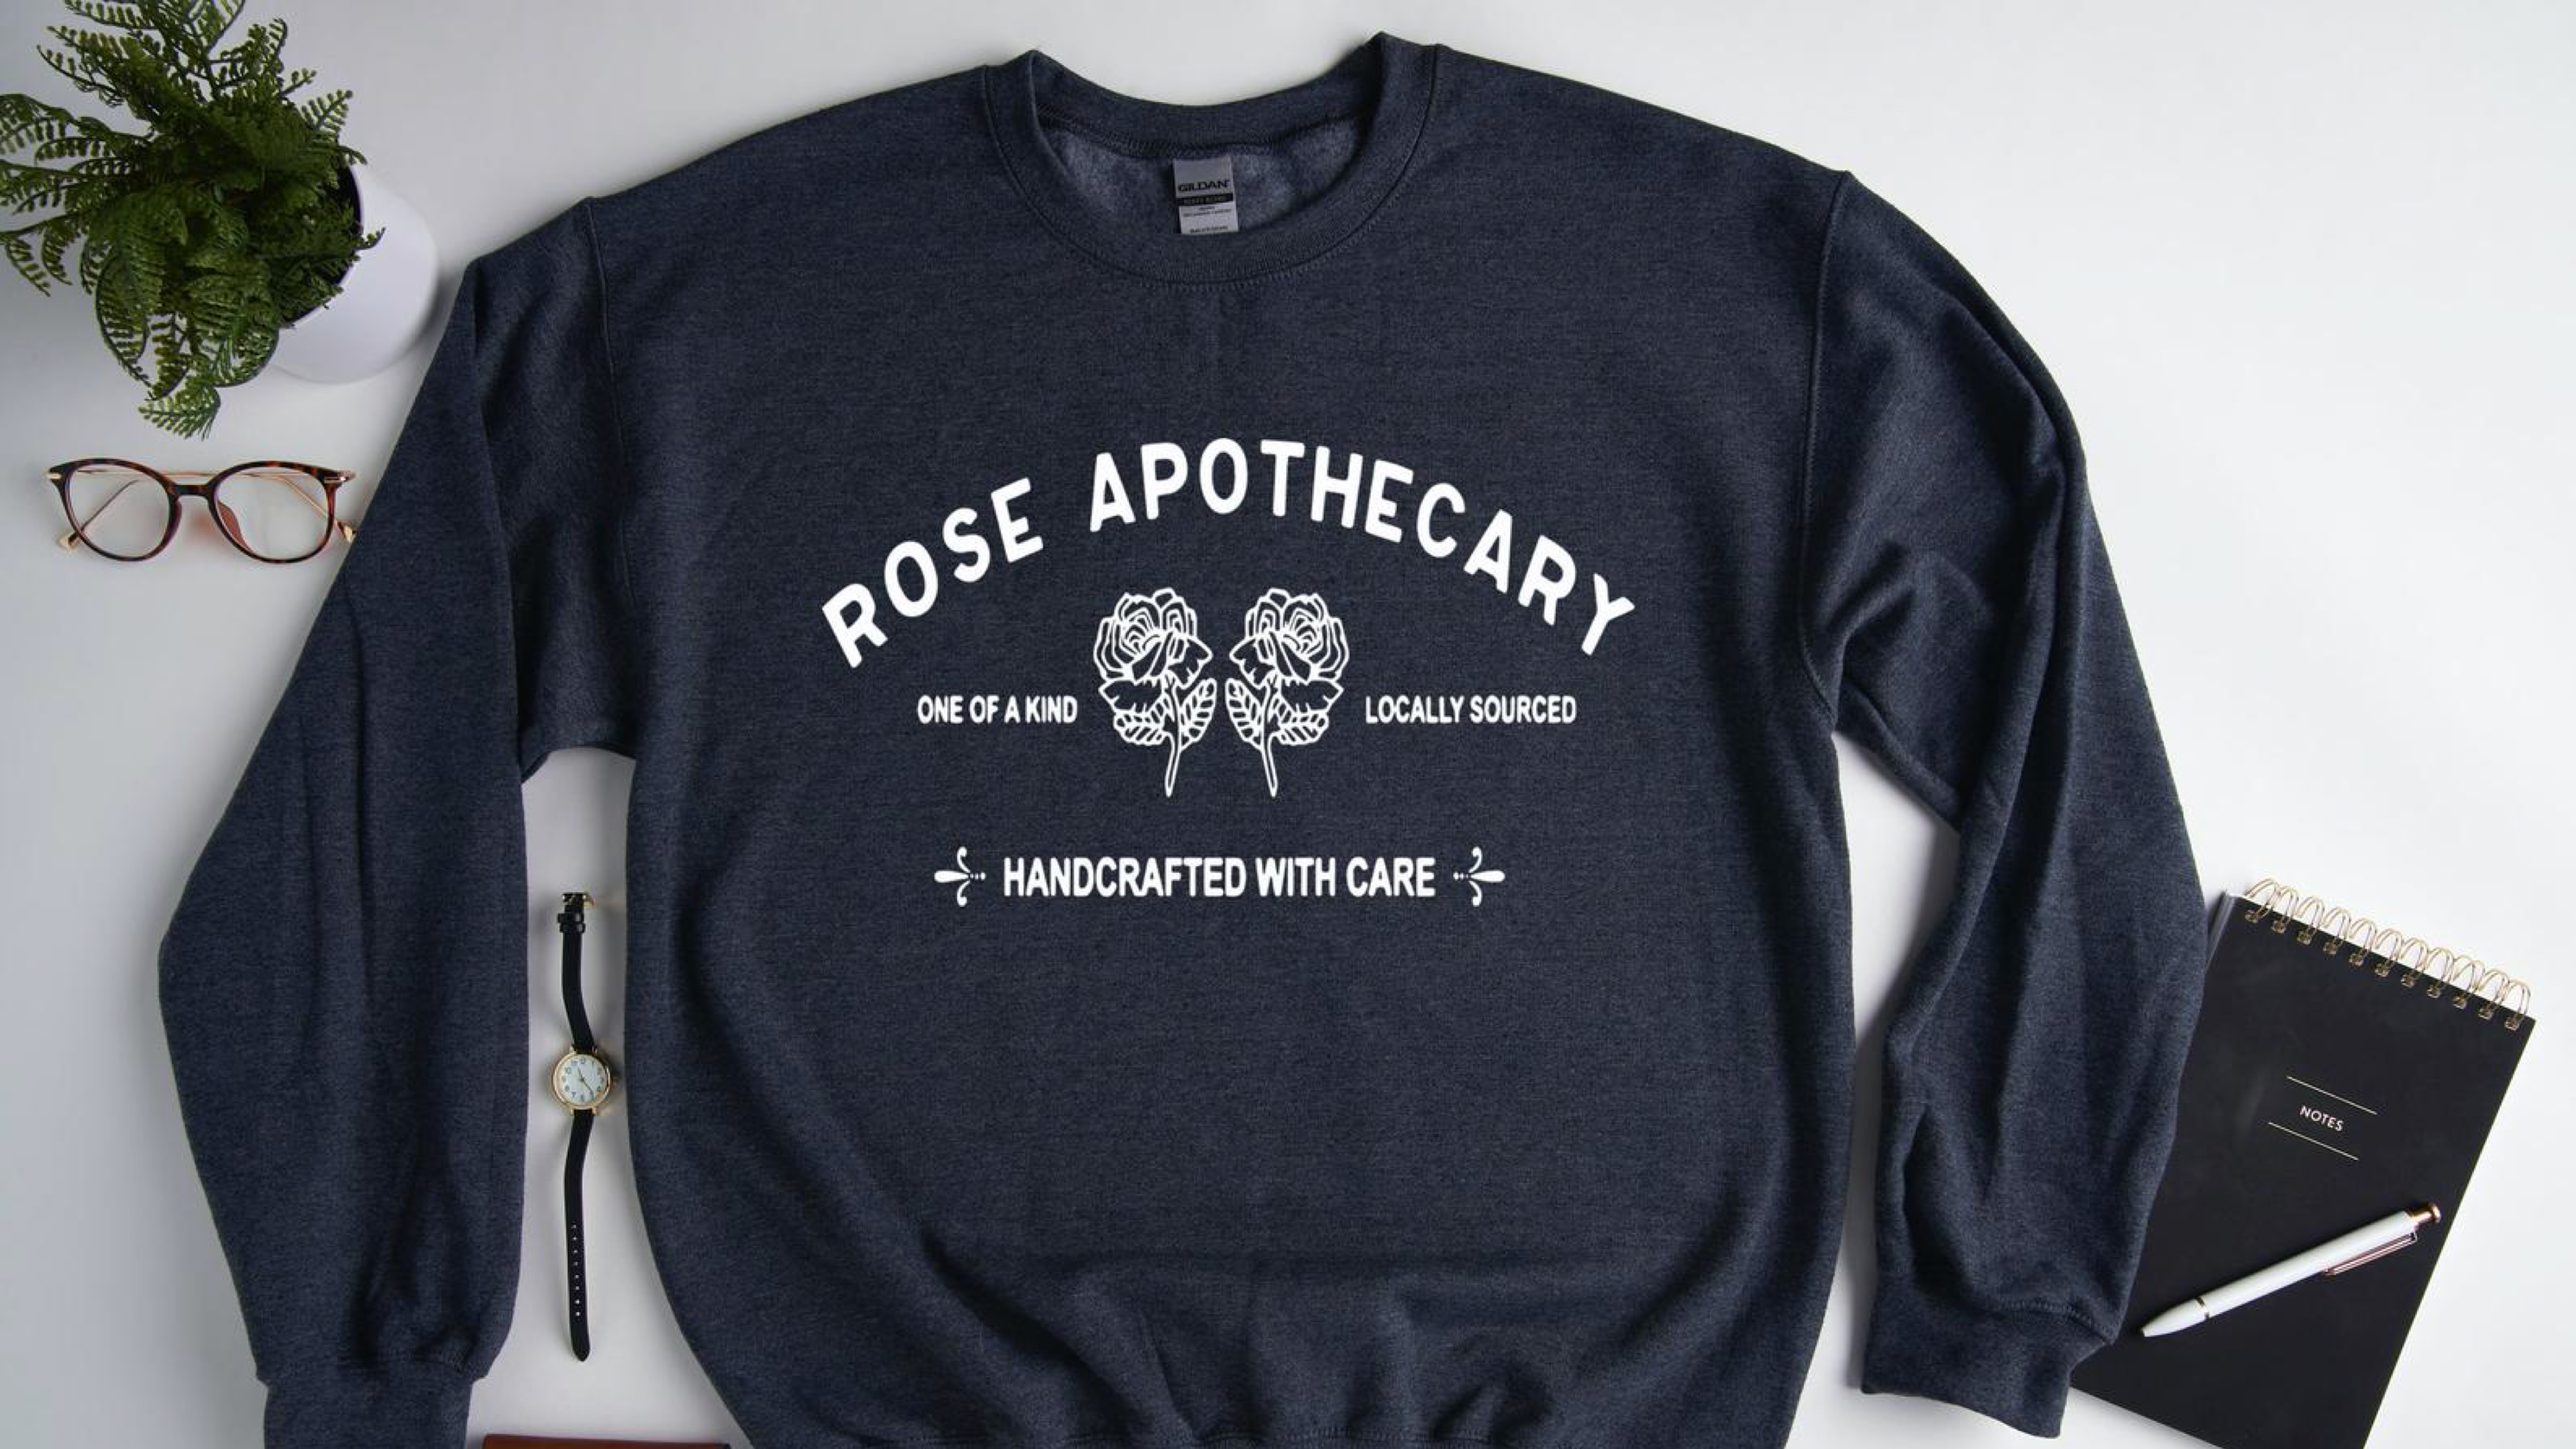 rose apothecary sweatshirt from schitt's creek